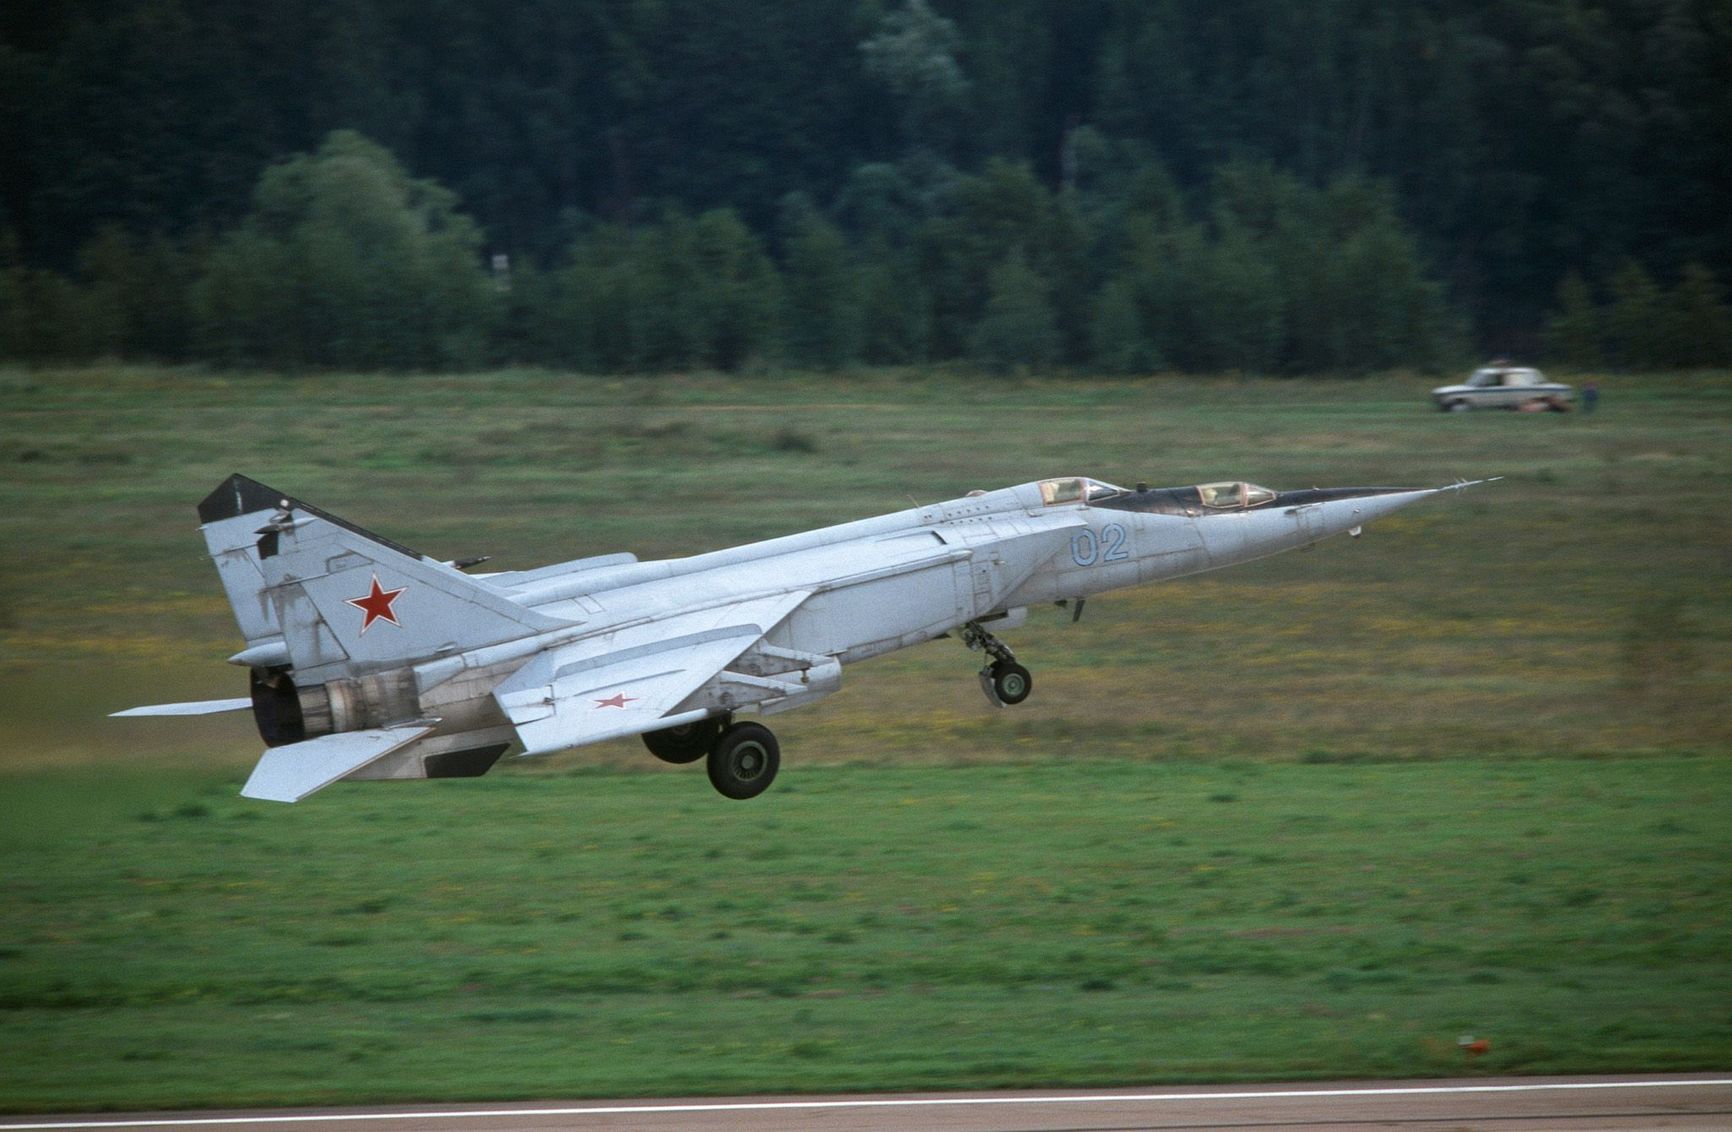 The MiG-25